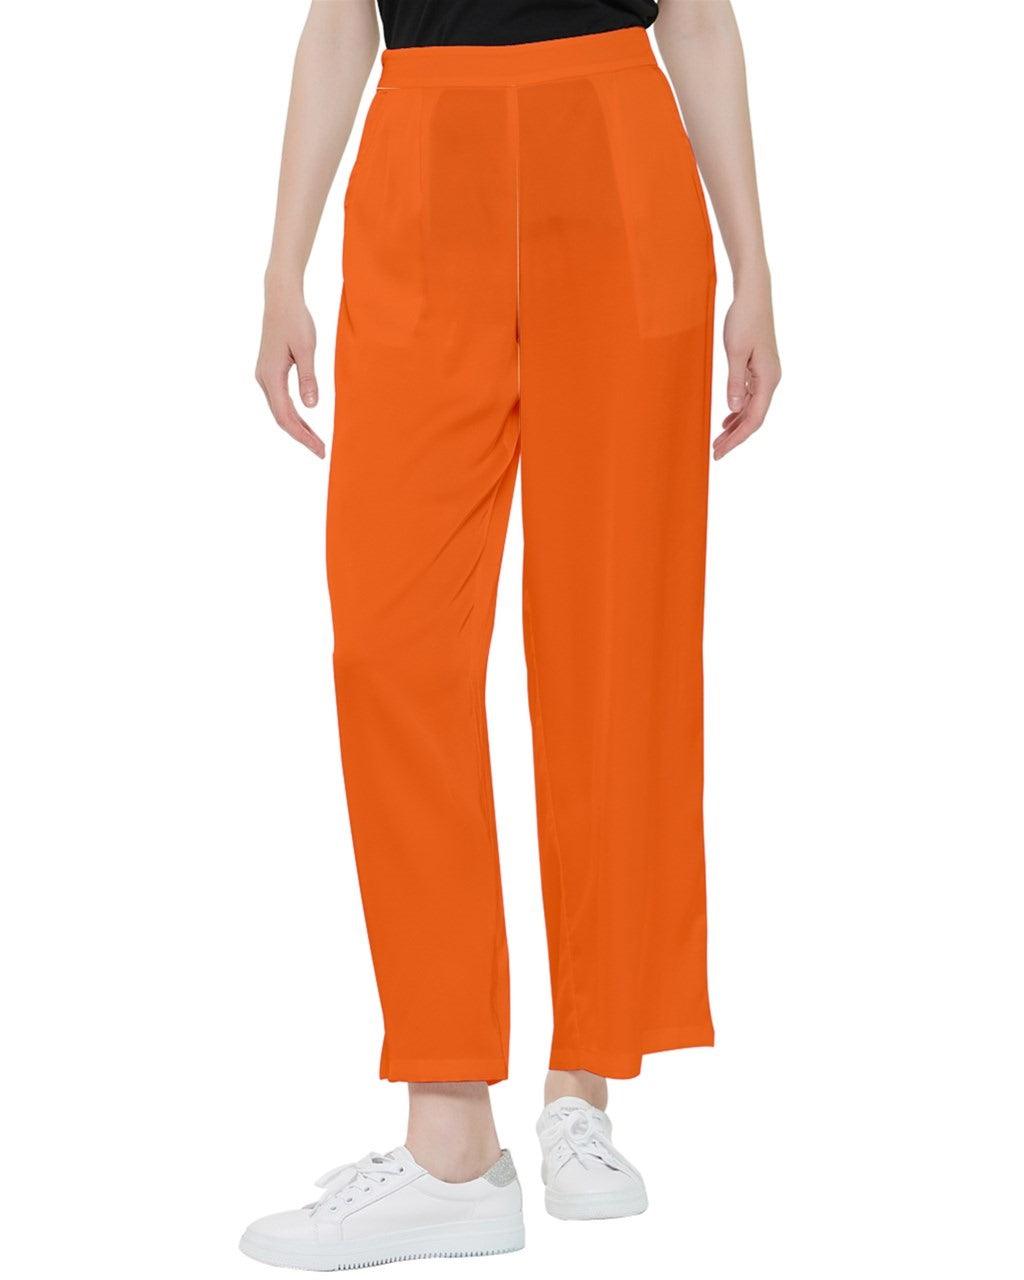 Mandra Orange Women's Bootcut Mid-Rise Pants Trousers - Plus Size